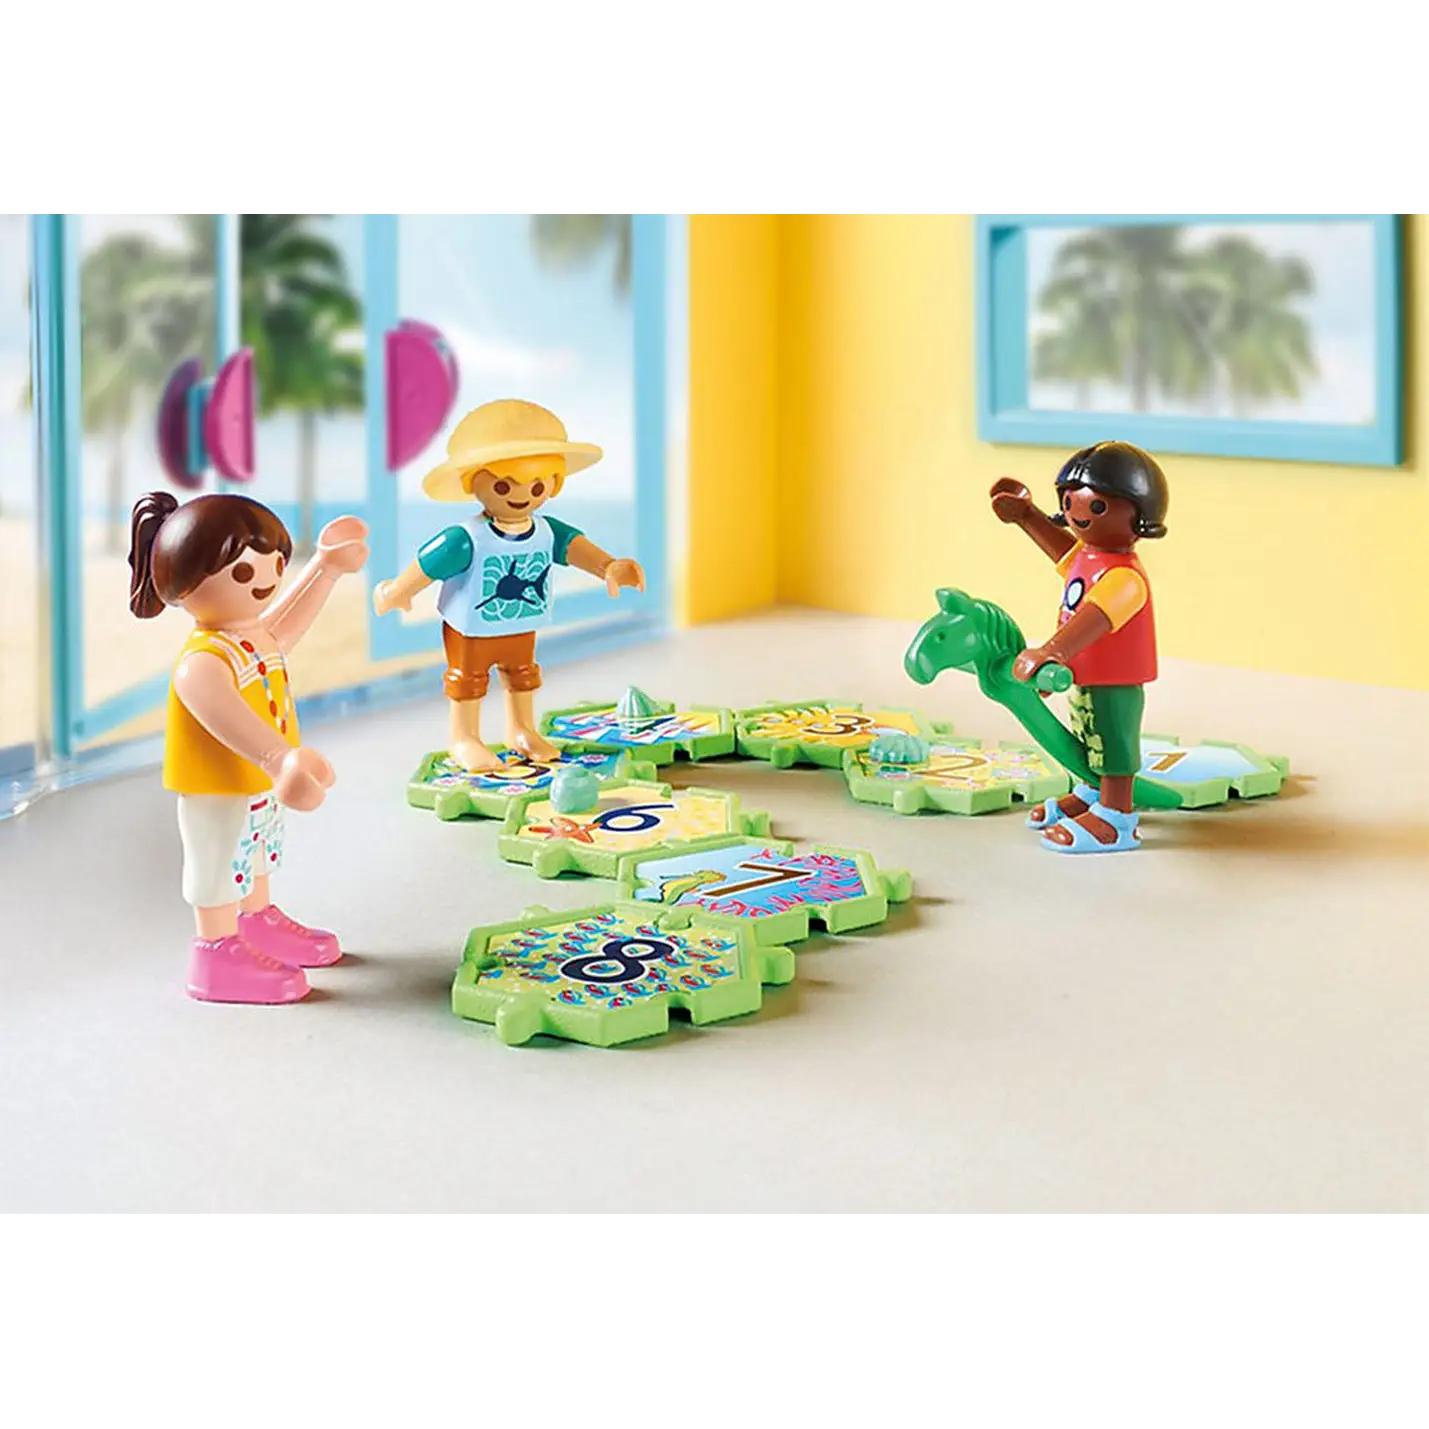 Playmobil Family Fun - Beach Snack Bar 70437 (for Kids 4 yrs old